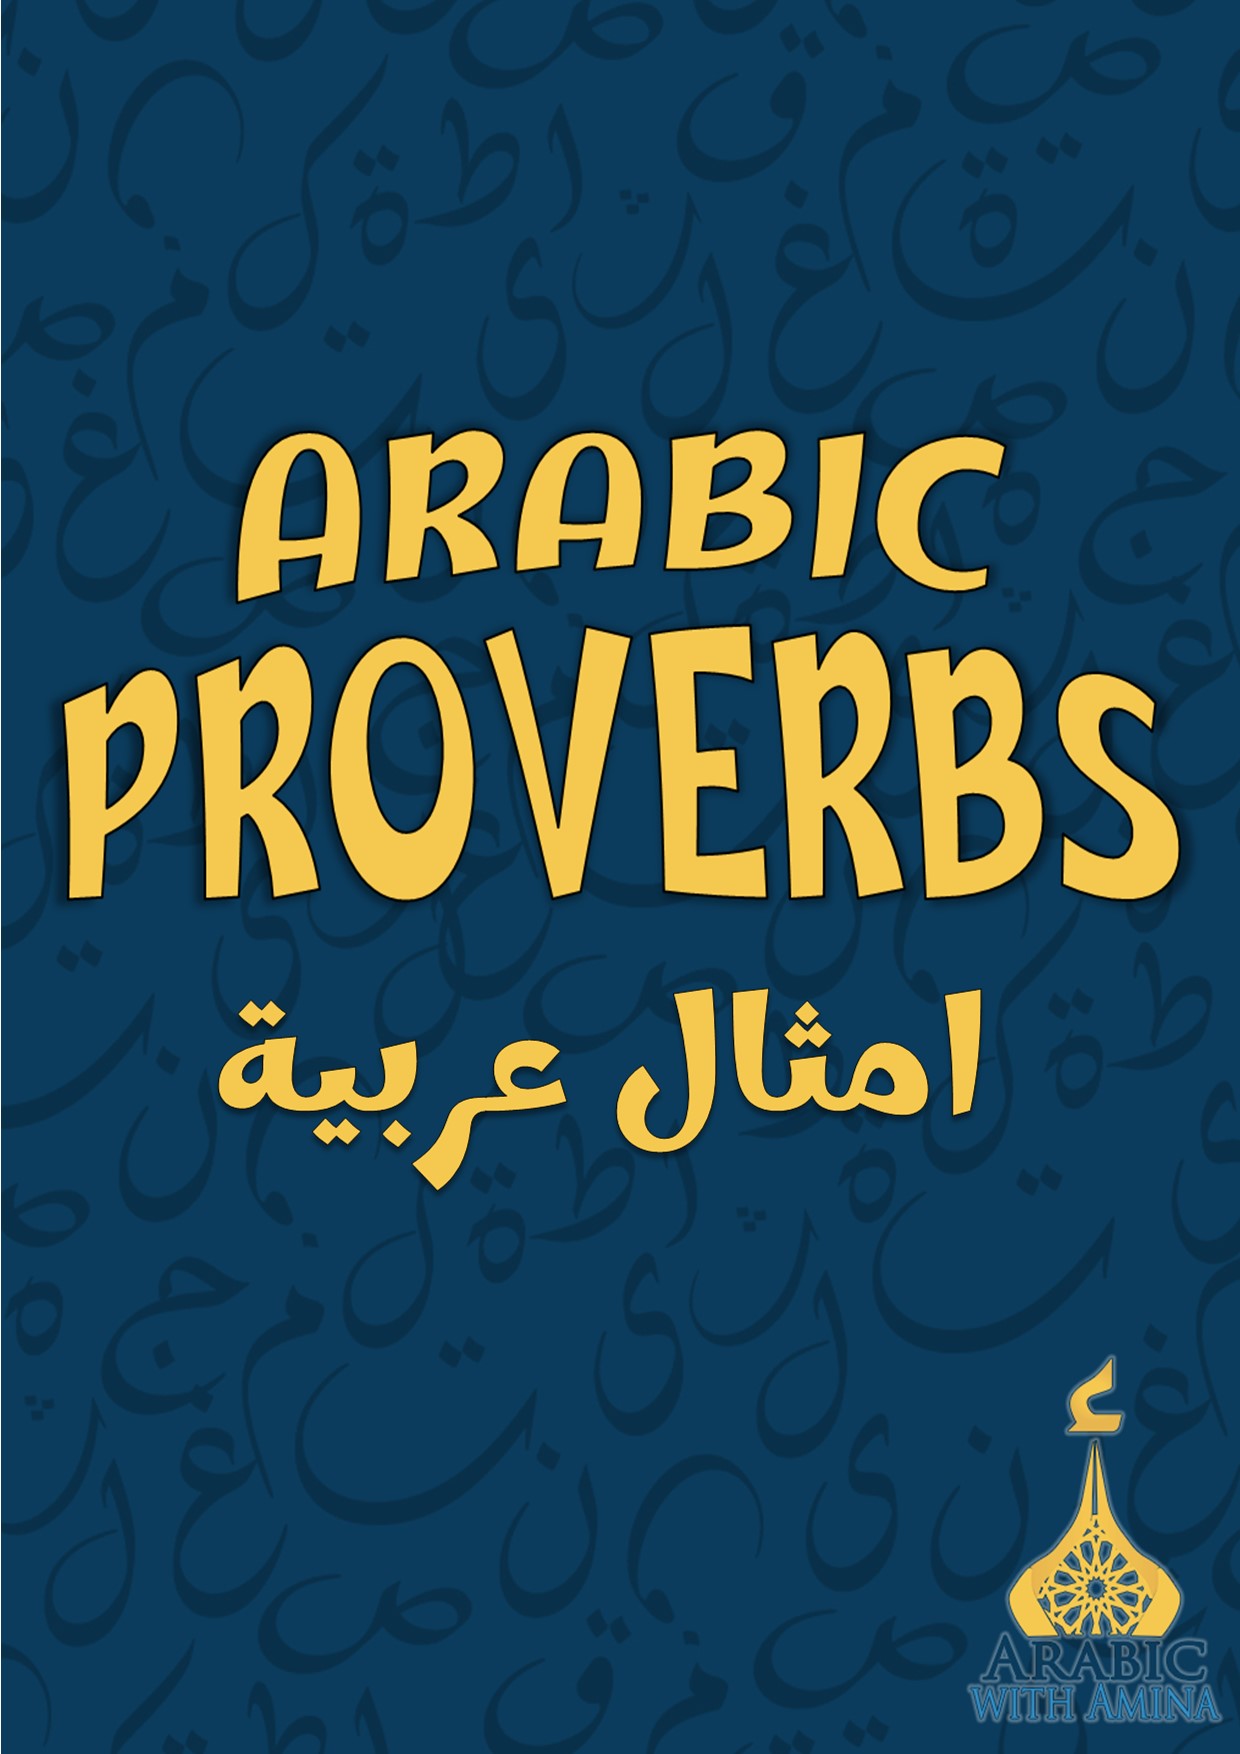 FREE Arabic Proverbs eBook!